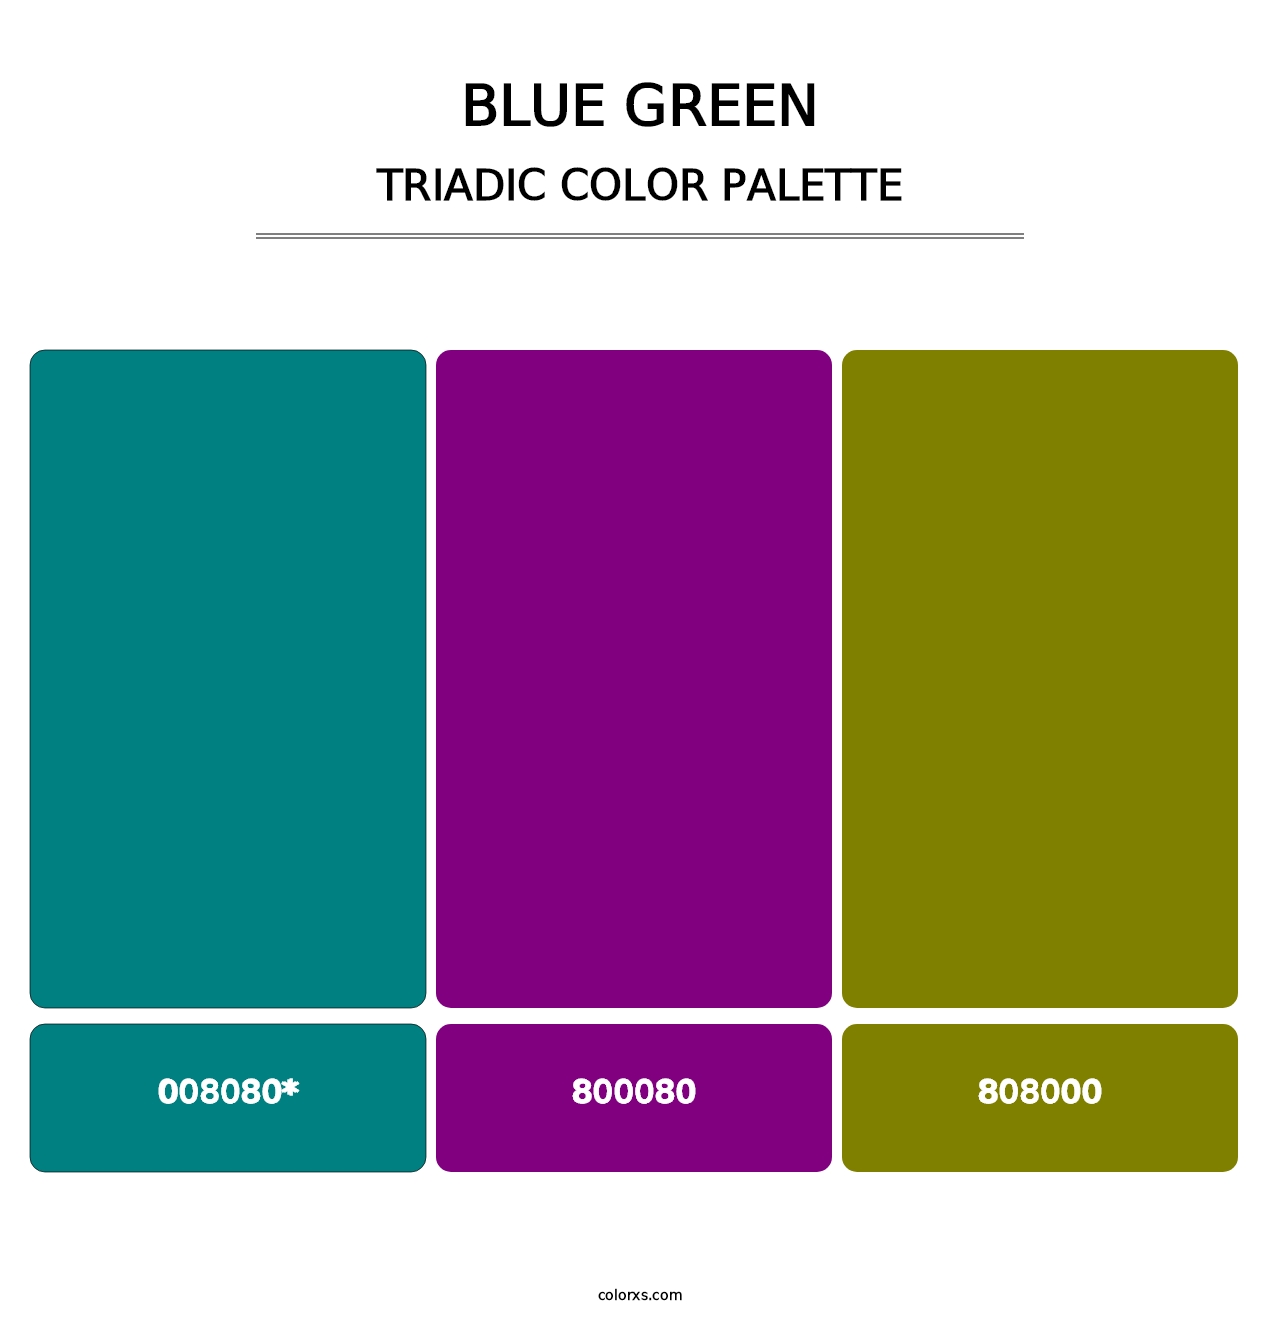 Blue Green - Triadic Color Palette